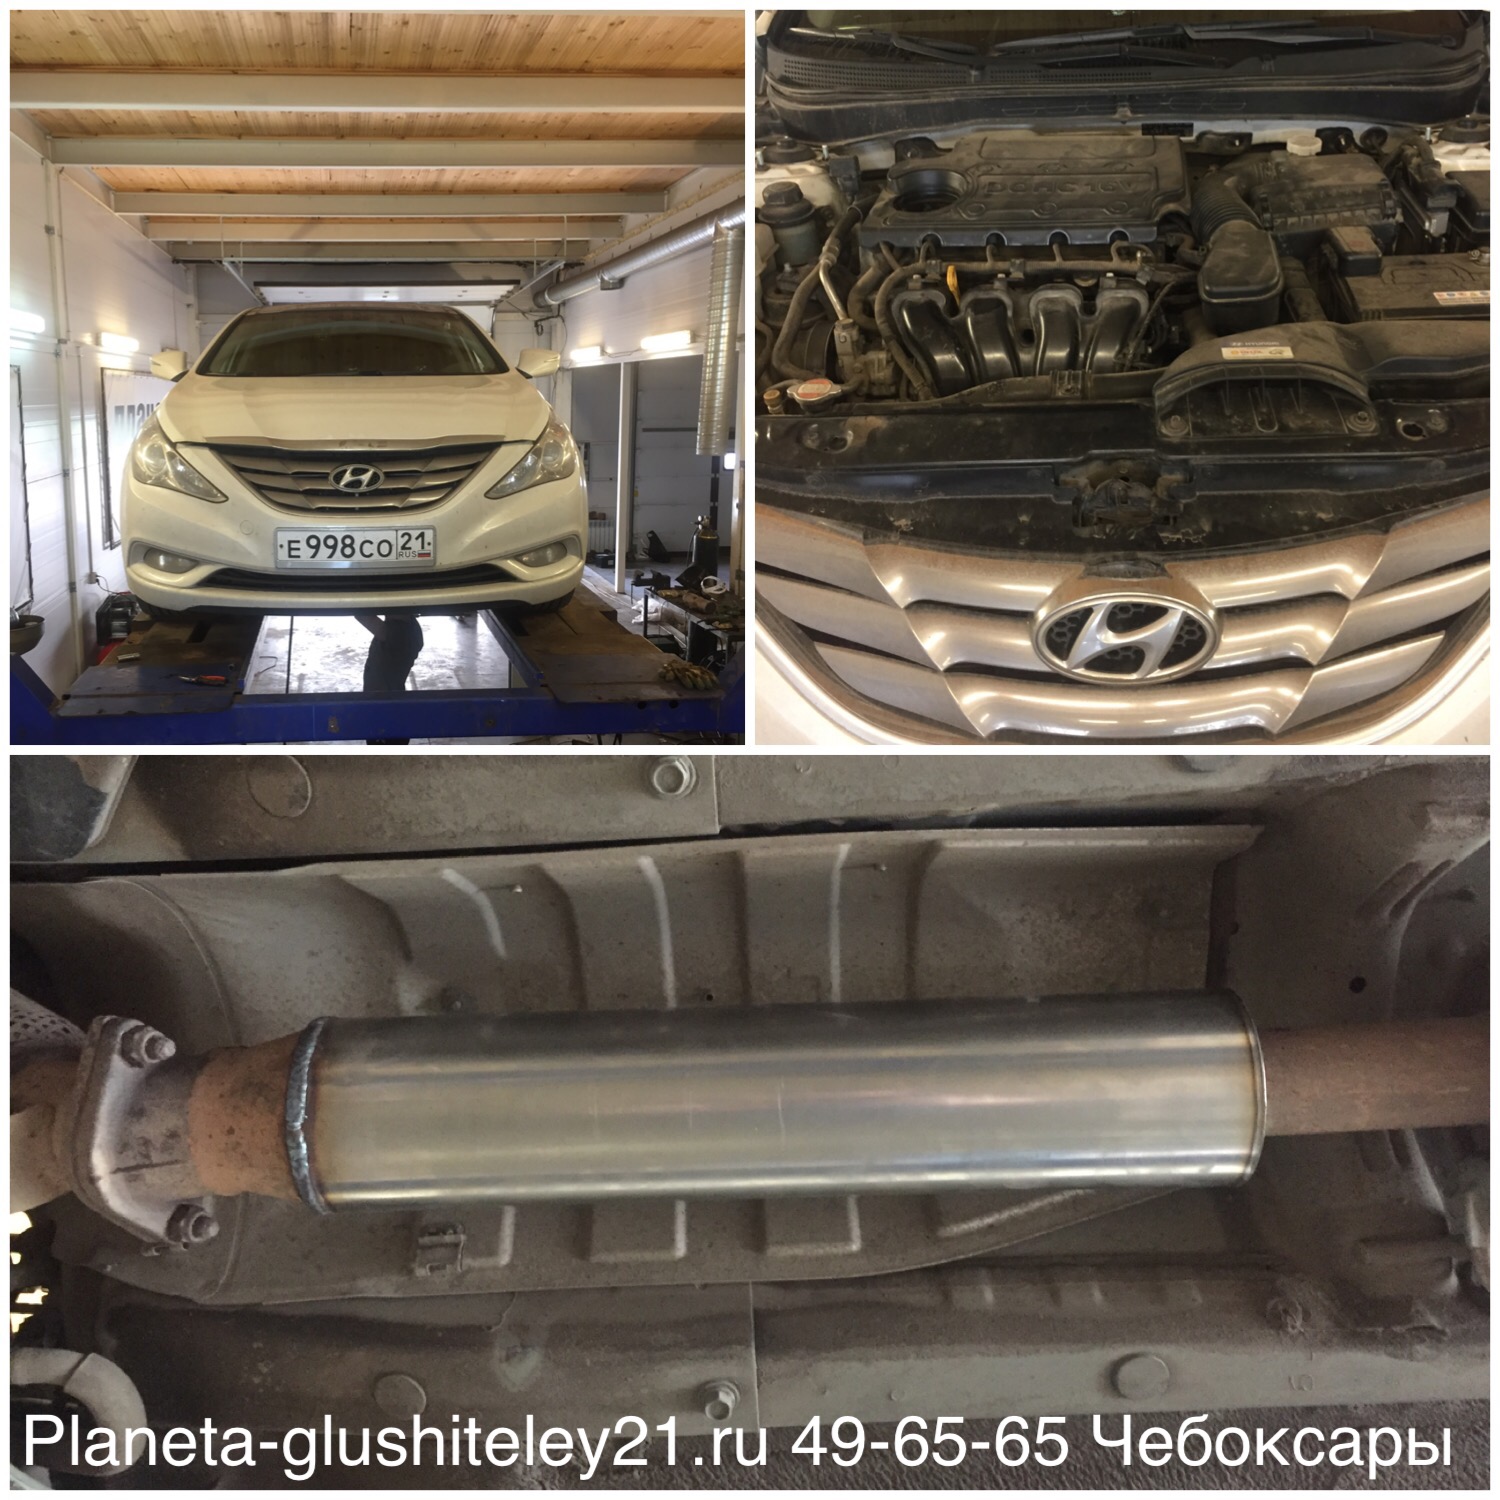 Hyundai Sonata 2.0 удаление катализатора 49-65-65 Чебоксары